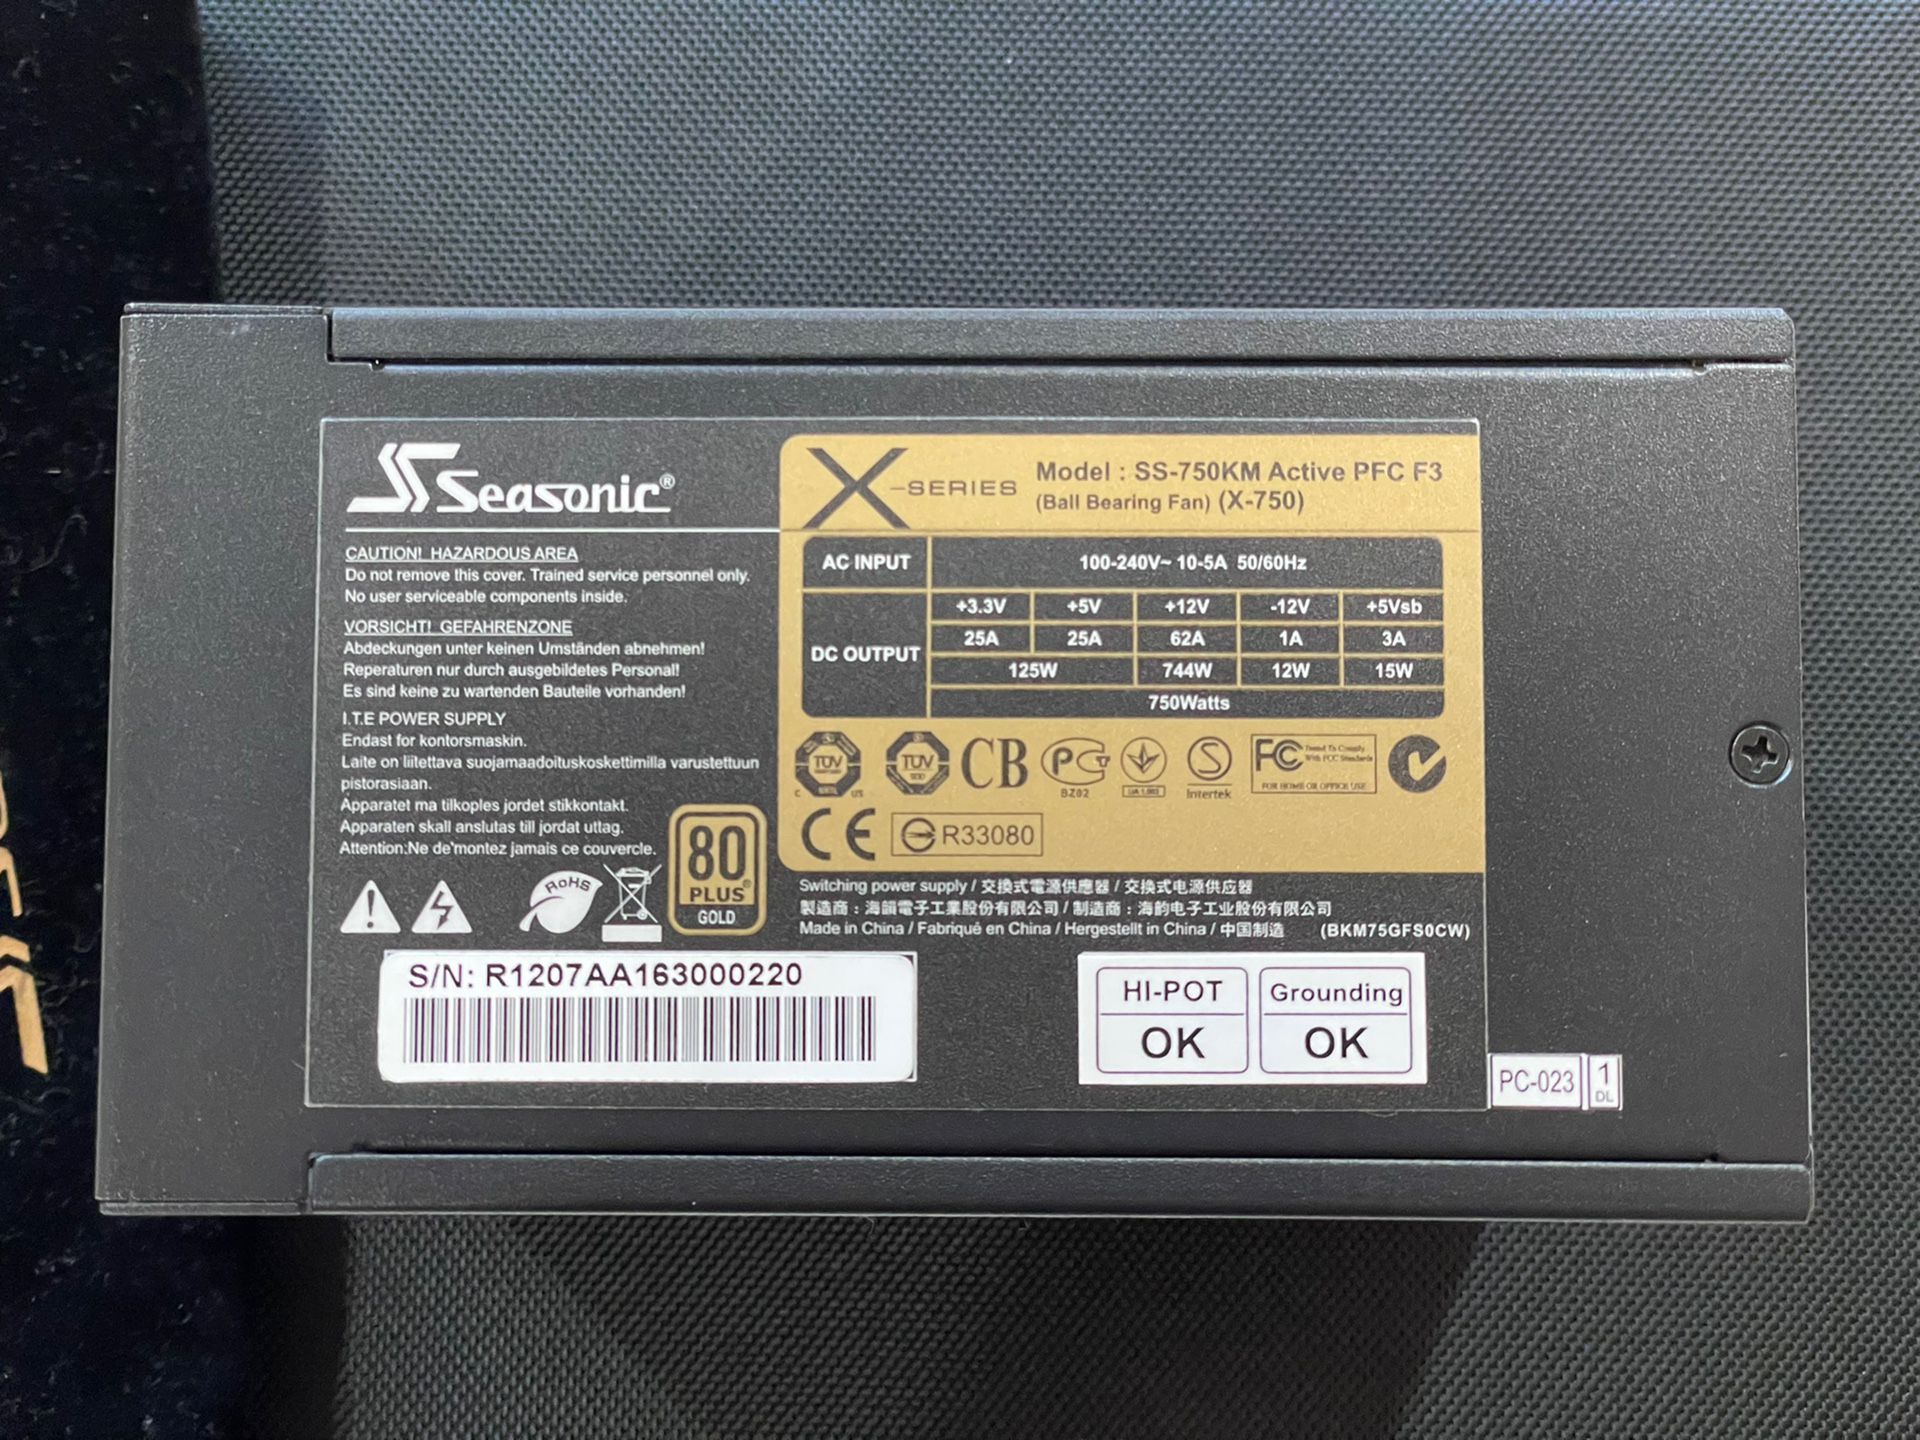 Sea sonic Ss-750km 80plus Gold Modular Power Supply - Psu 